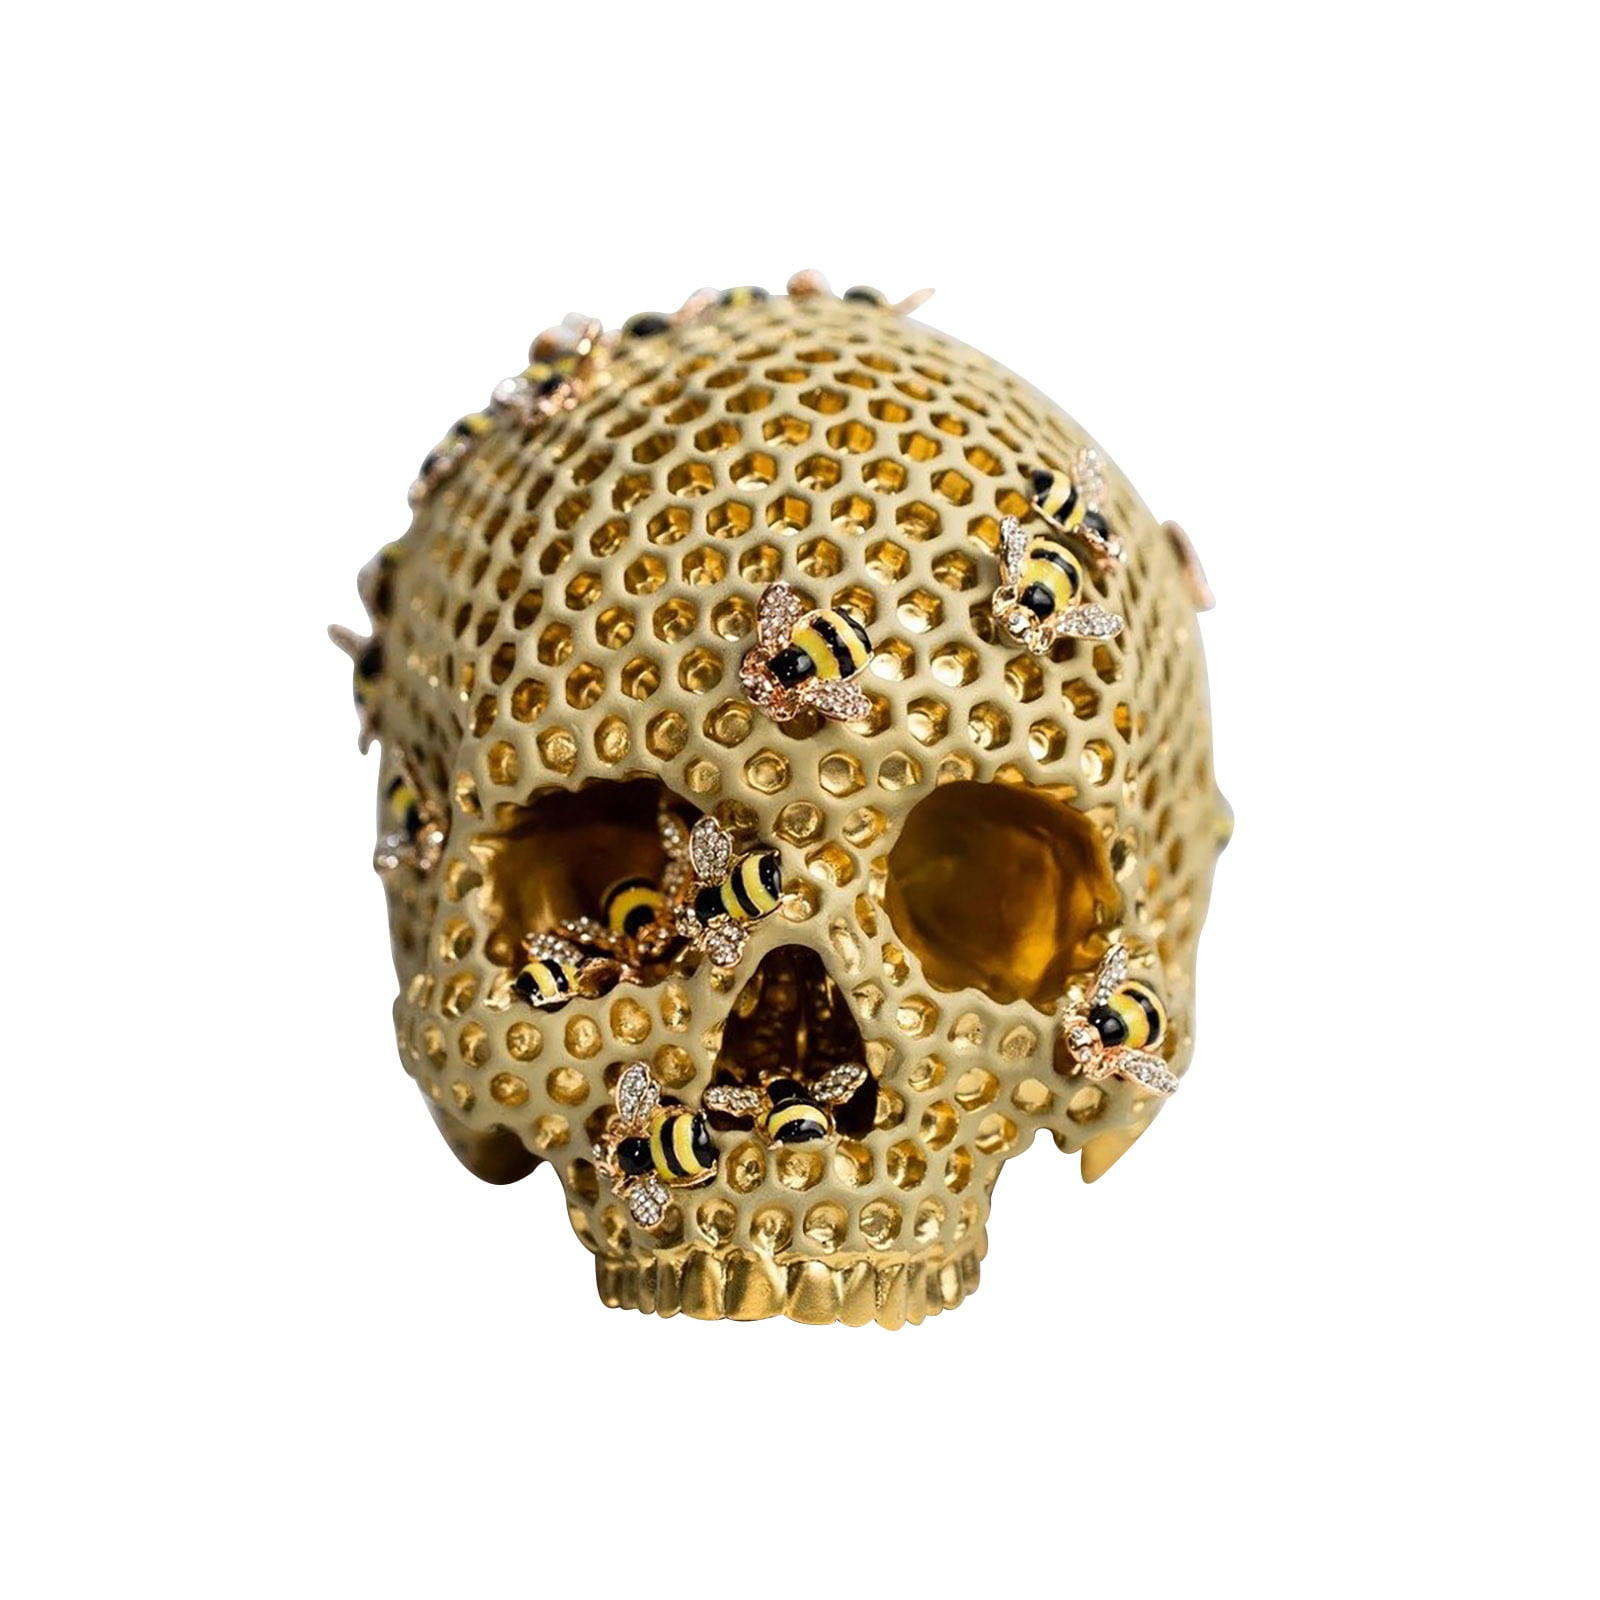 Small Skull Ornament Unusual Resin Gifts For Men Women New Decorative Home Decor 